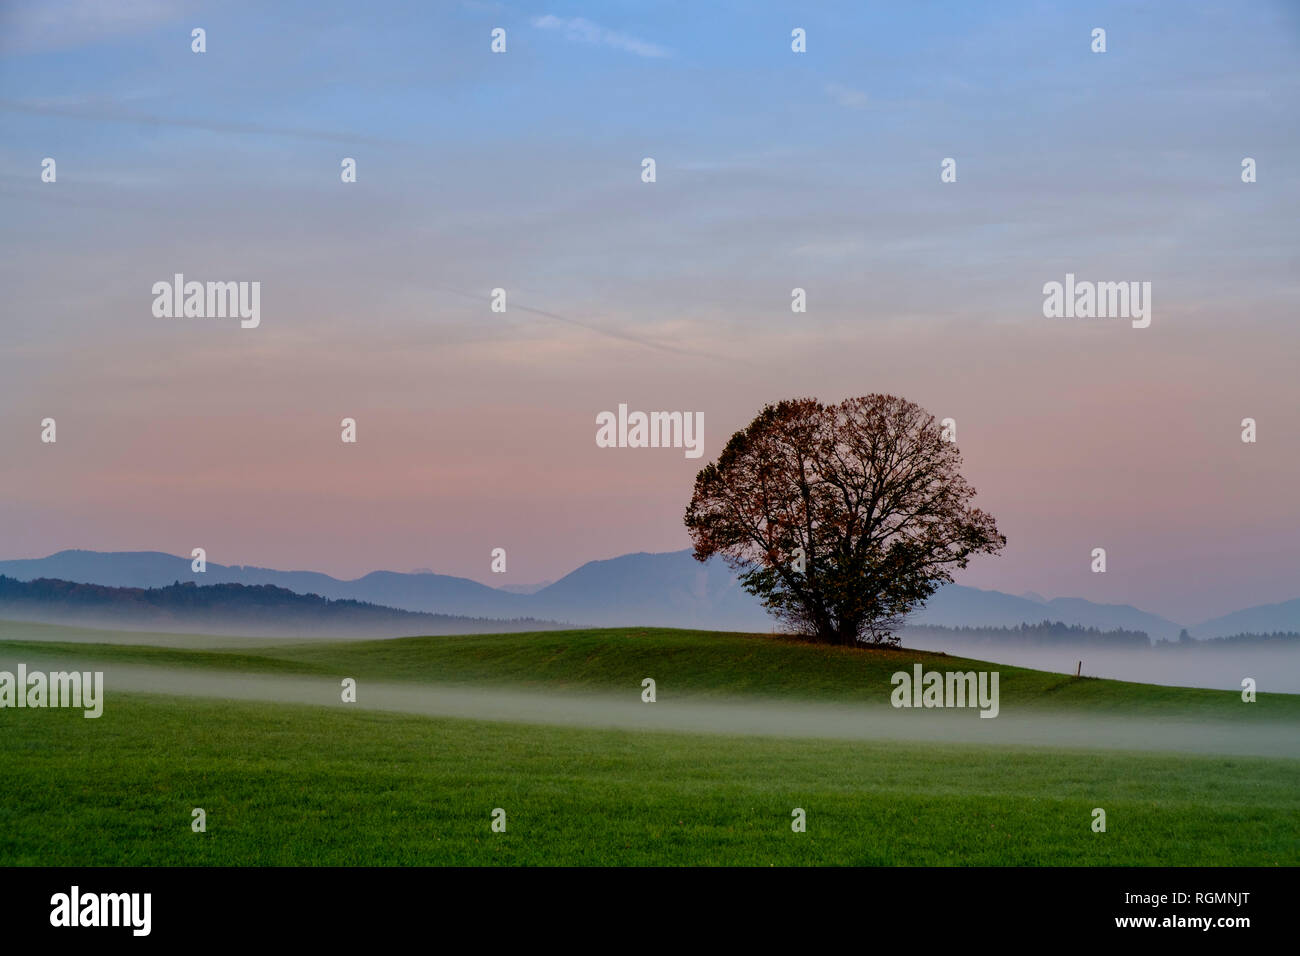 Germany, Pfaffenwinkel, view of landscape with single tree at morning mist Stock Photo